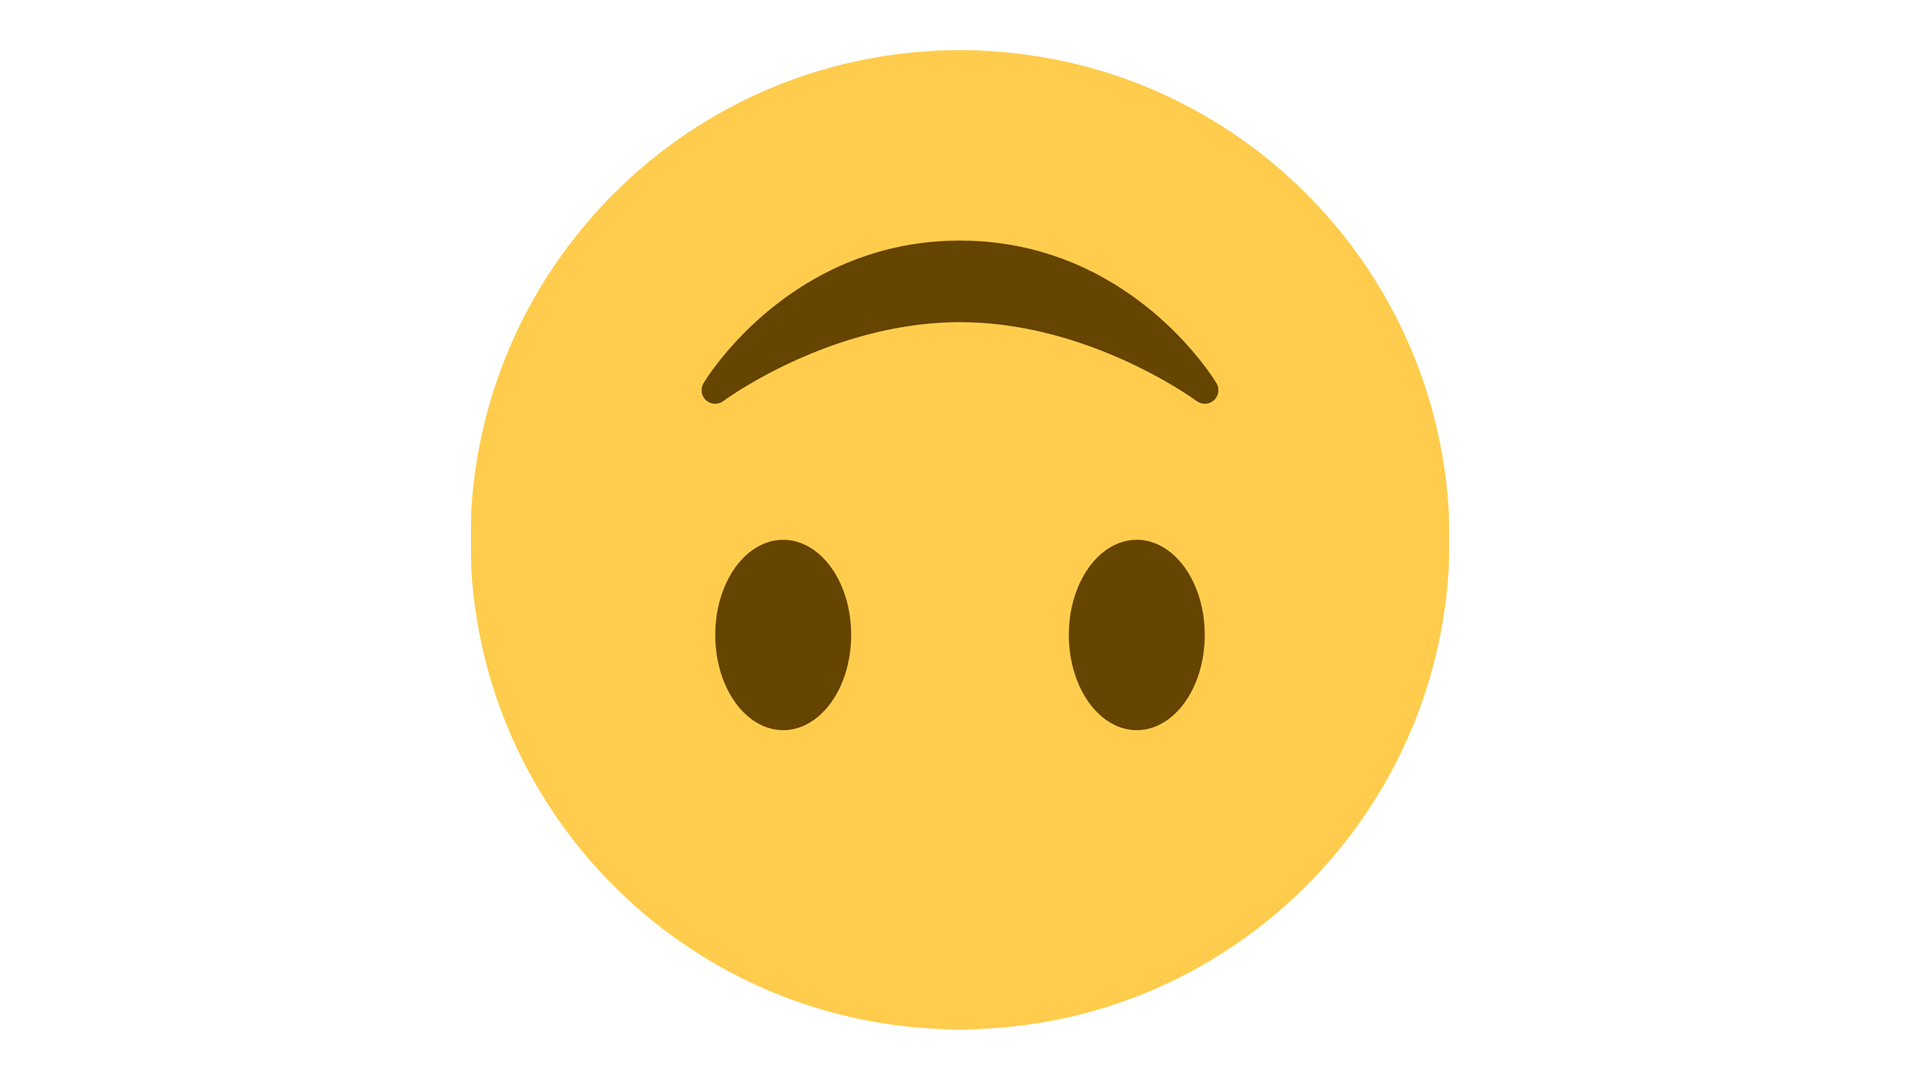 The upside-down emoji